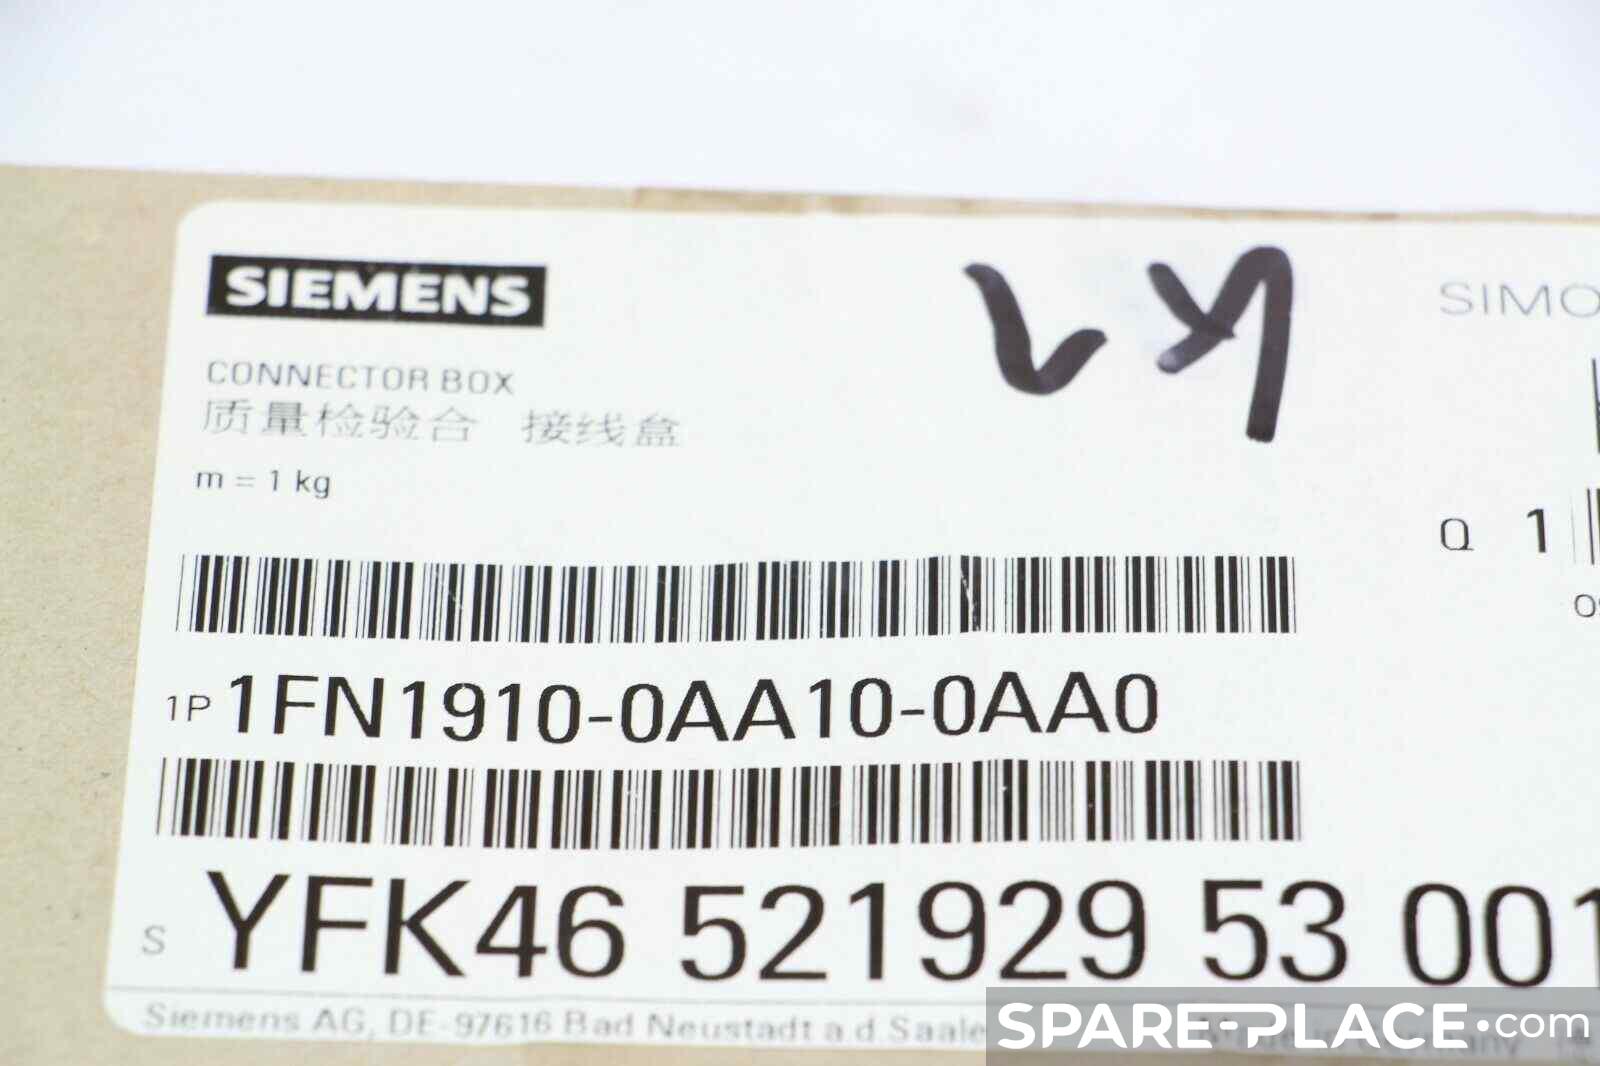 Référence 1FN1910-0AA10-0AA0 de la marque SIEMENS